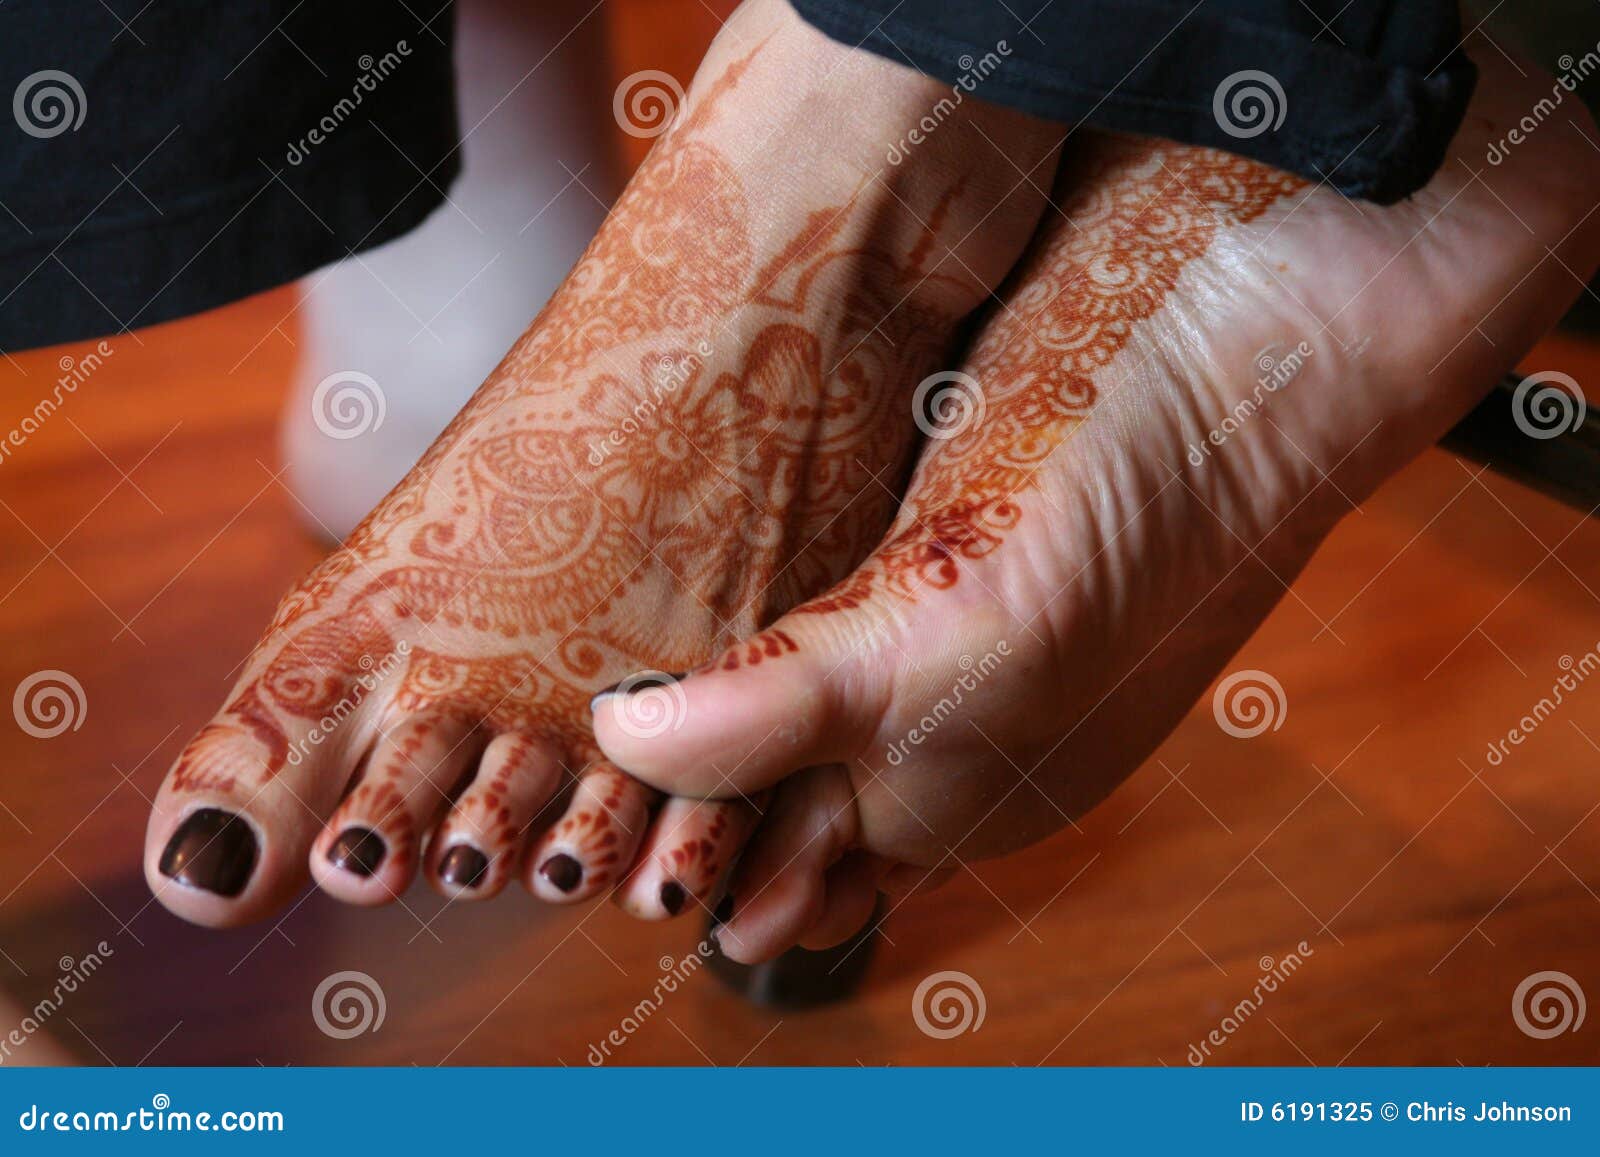 Feet muslim female Muslim women